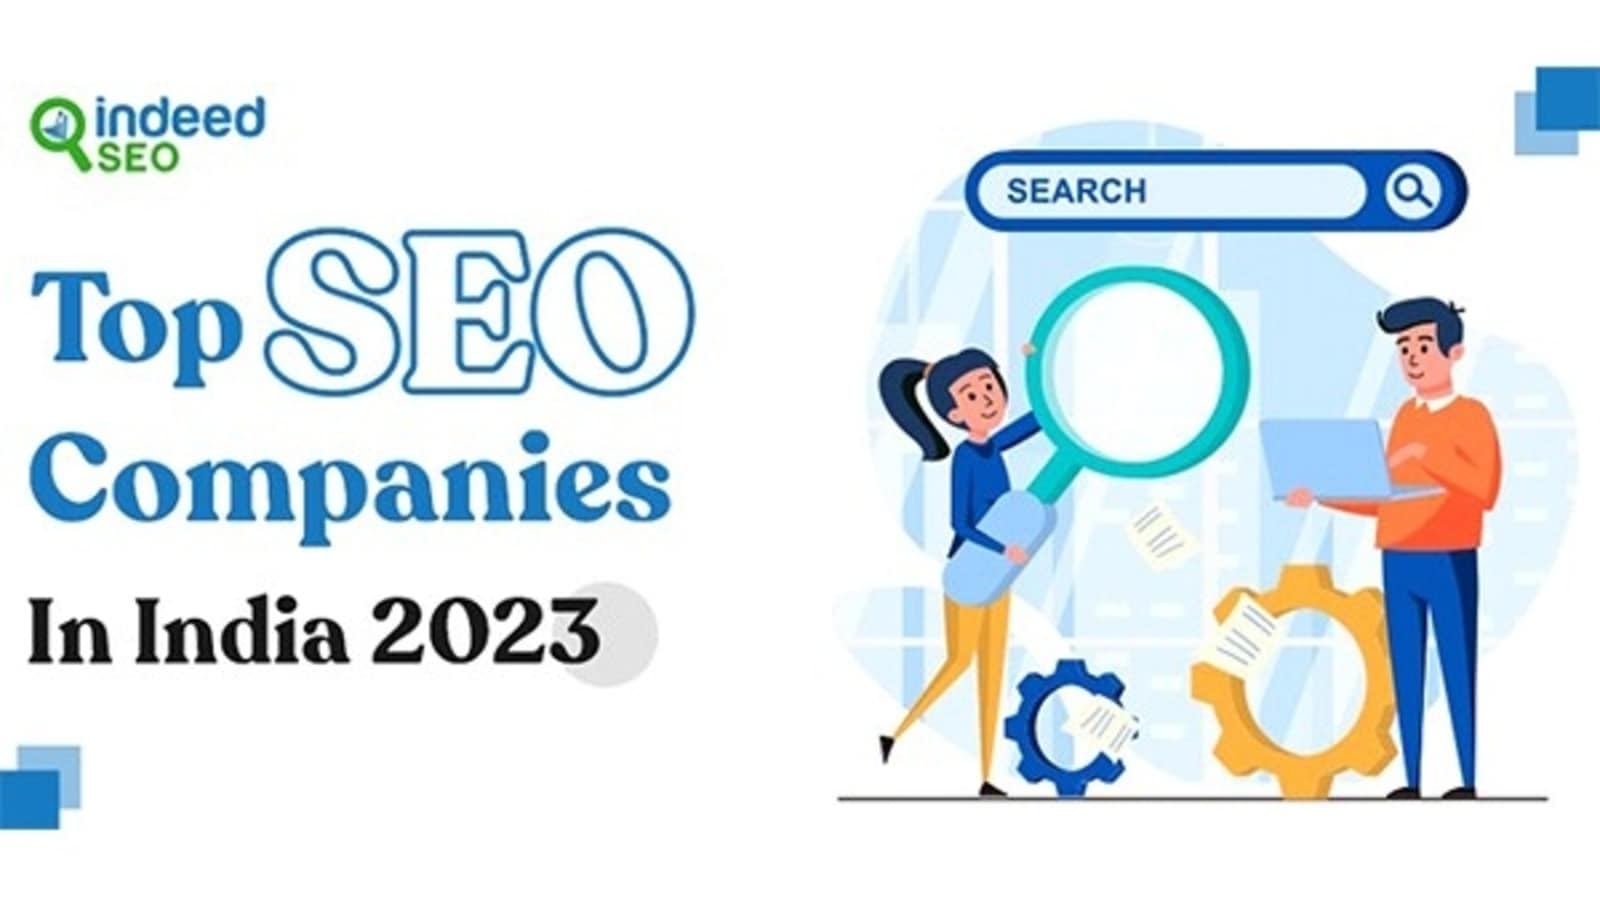 Top SEO Companies in India in 2023